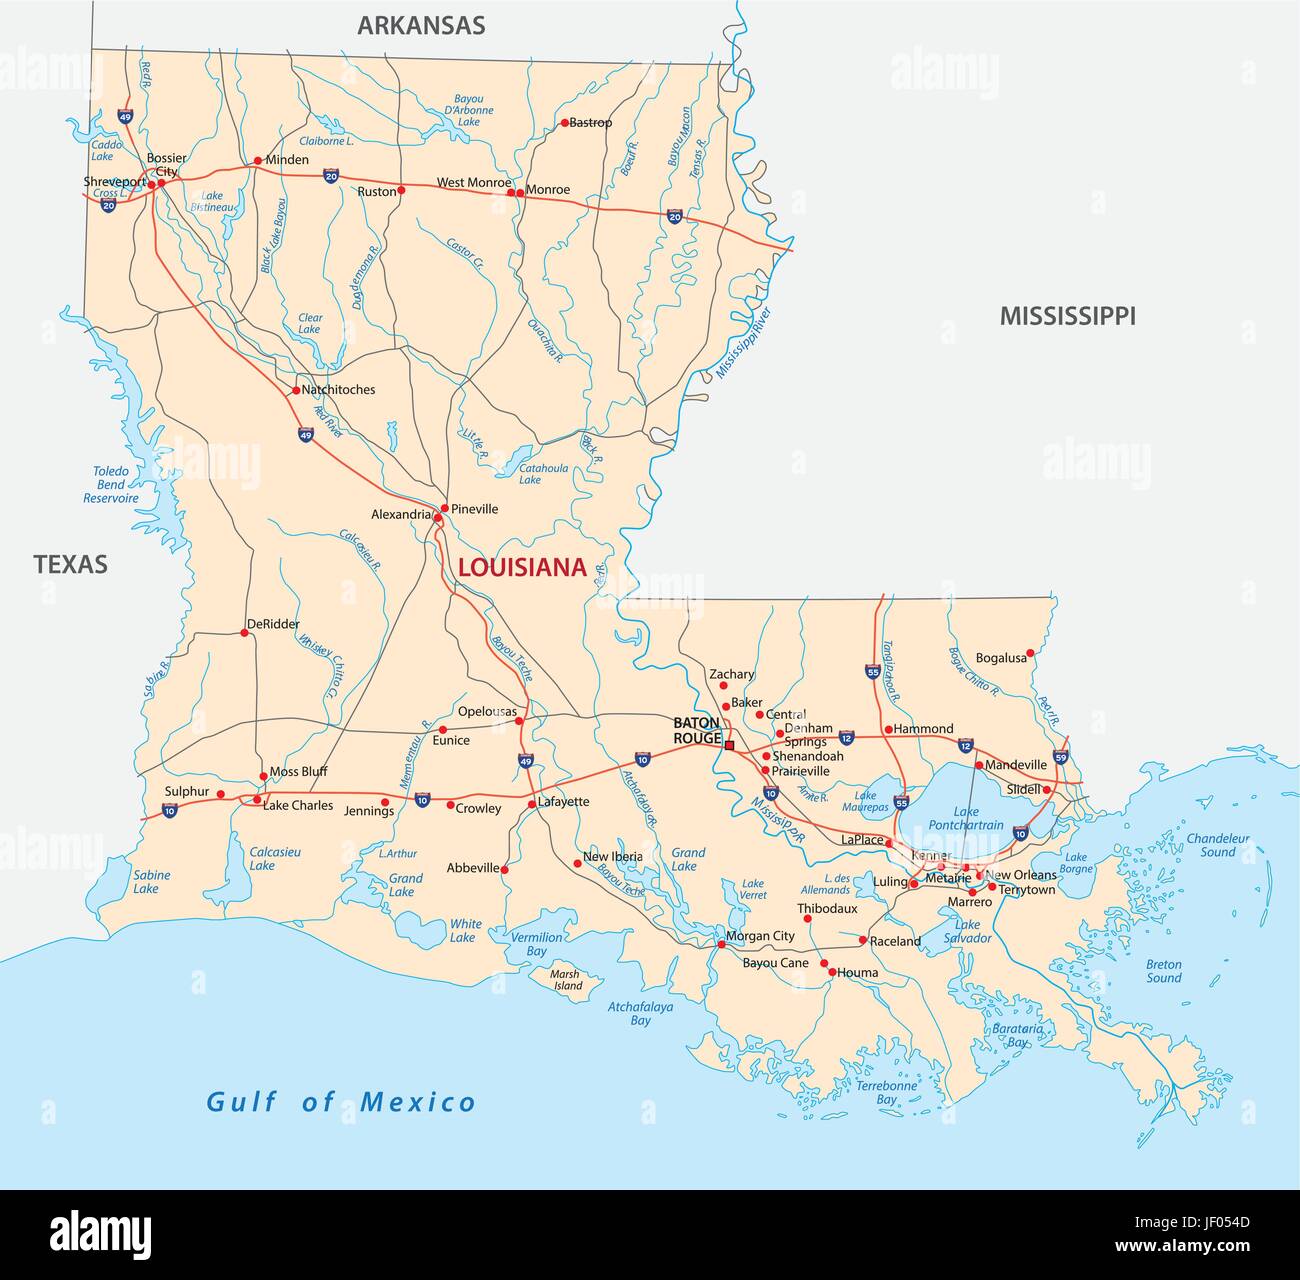 Louisiana Road Map Atlas 